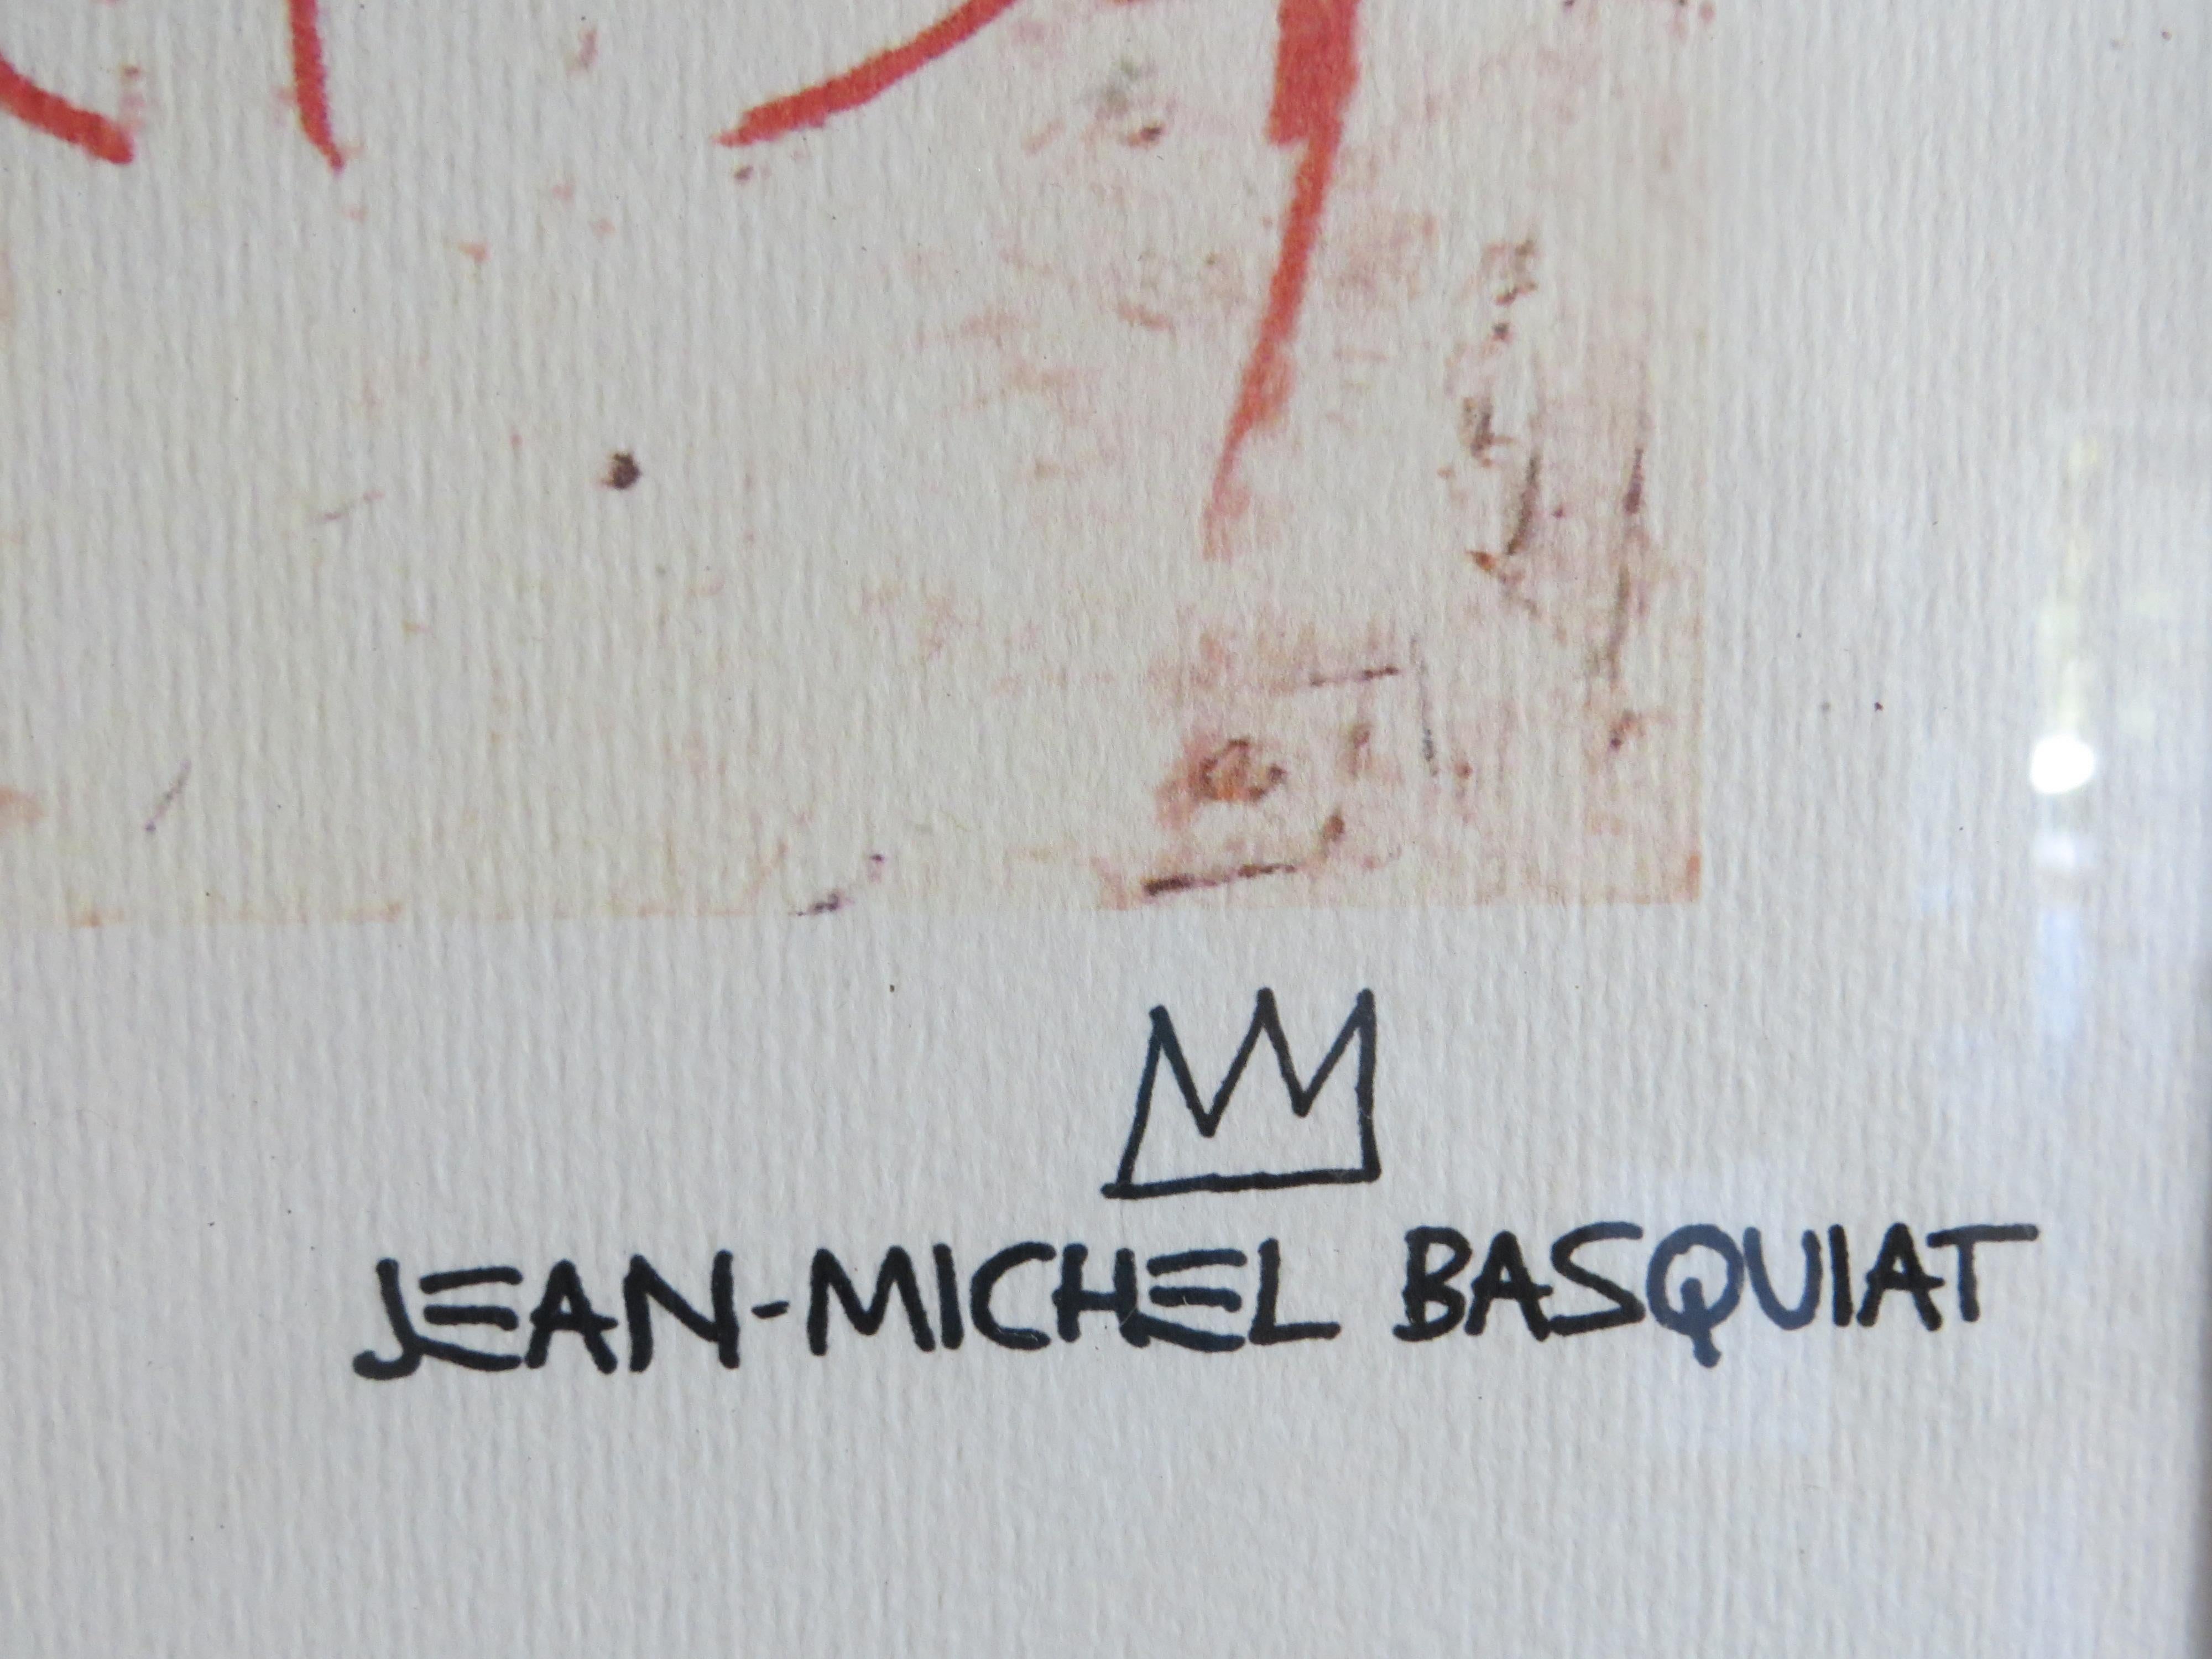 The Estate of Jean-Michel Basquiat,  Lithograph, 1113/ 300 Ltd  - Street Art Print by (after) Jean-Michel Basquiat